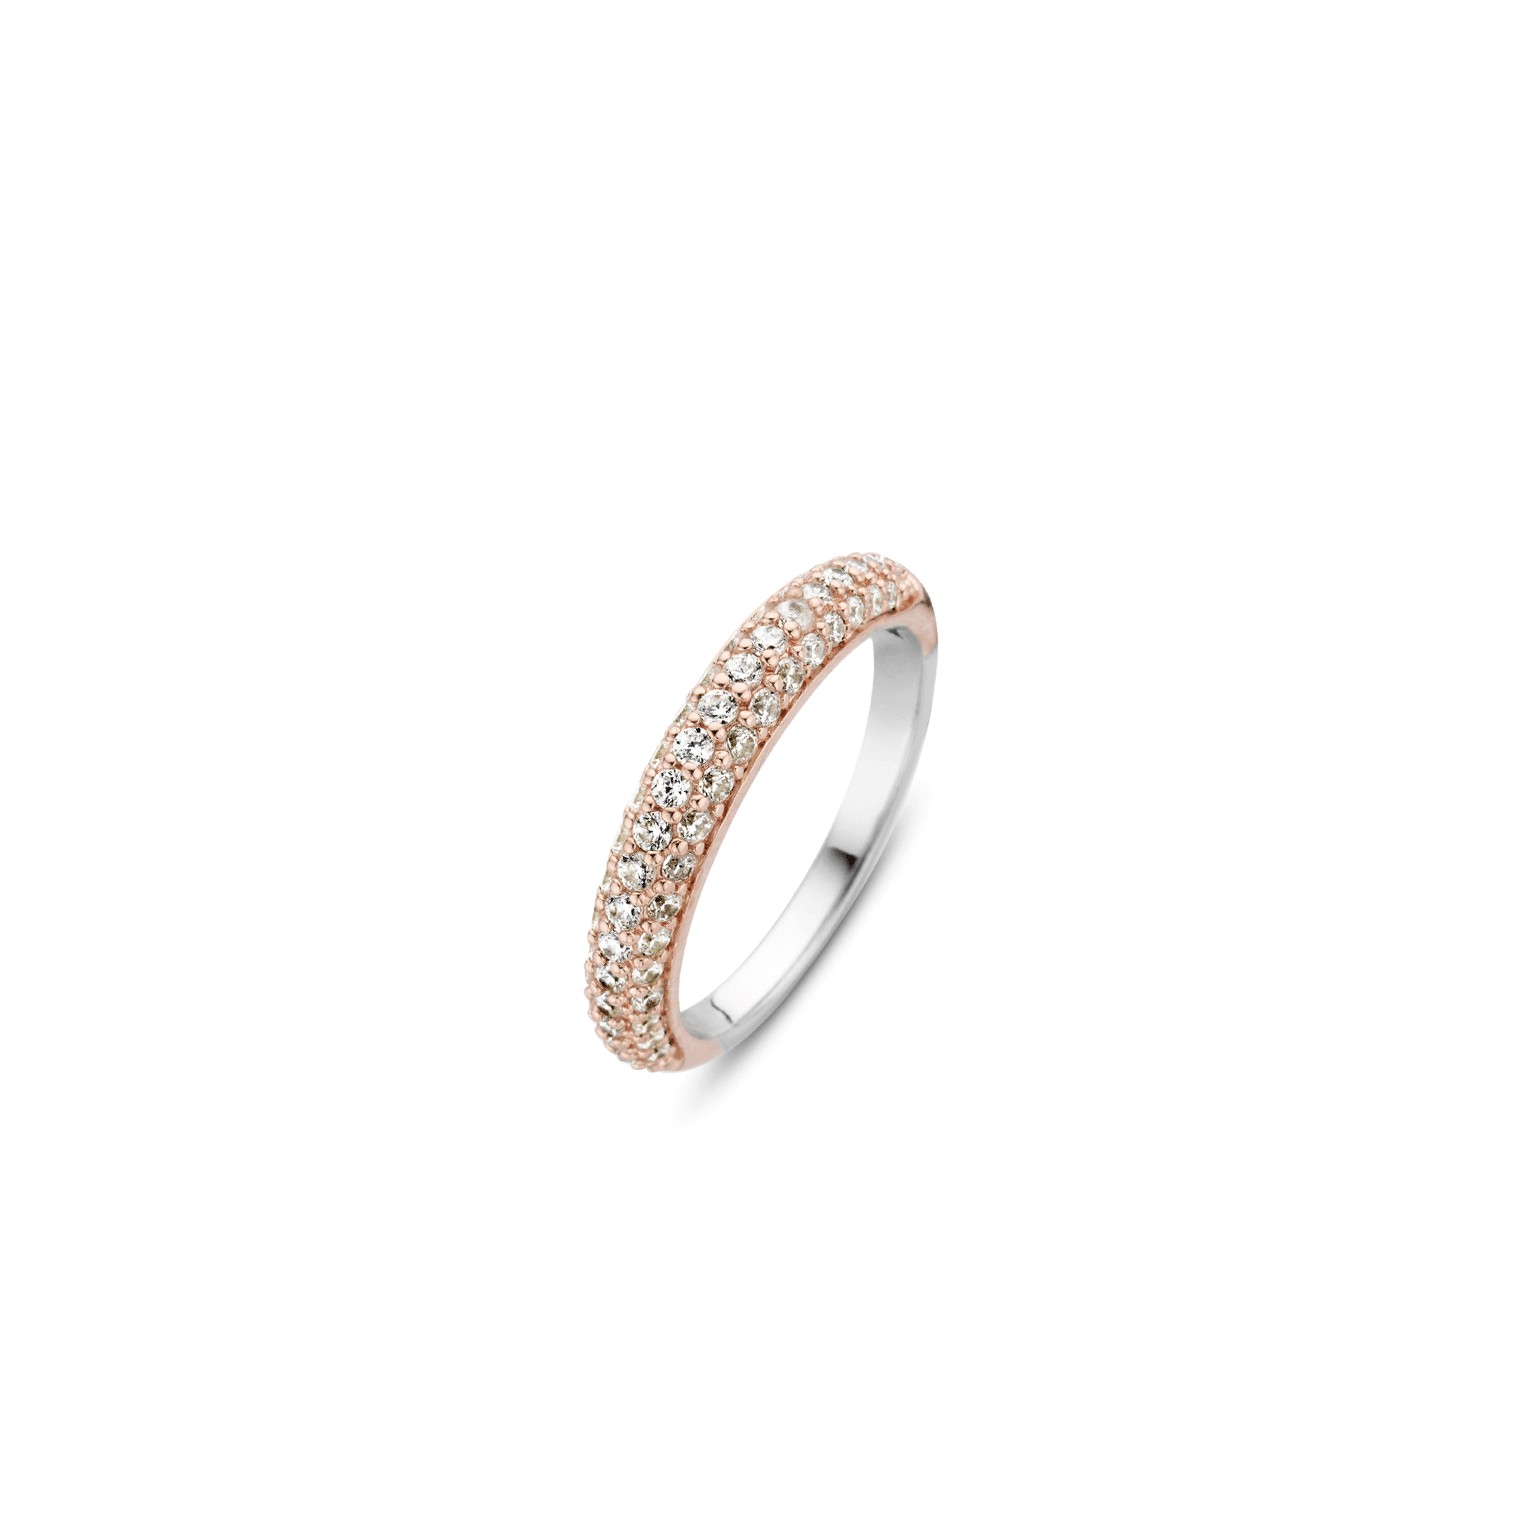 TI SENTO - Milano Ring 12105ZR Gala Jewelers Inc. White Oak, PA